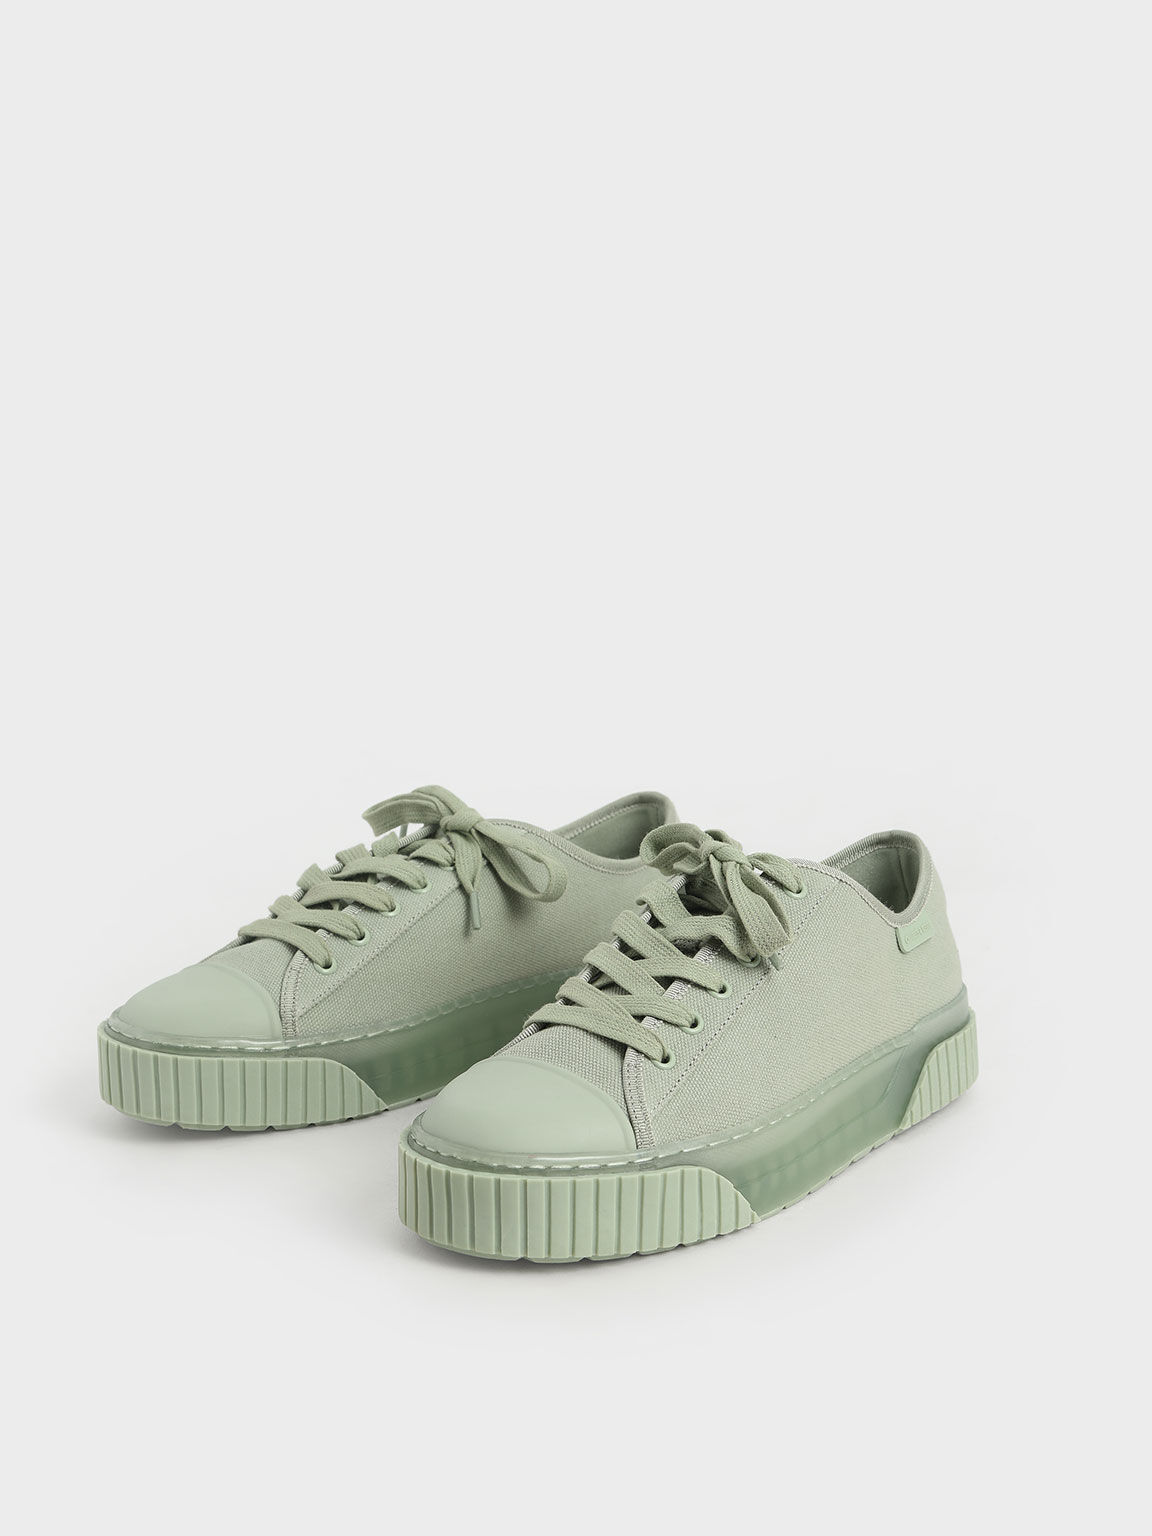 Purpose Collection 2021: Organic Cotton Platform Sneakers, Mint Green, hi-res